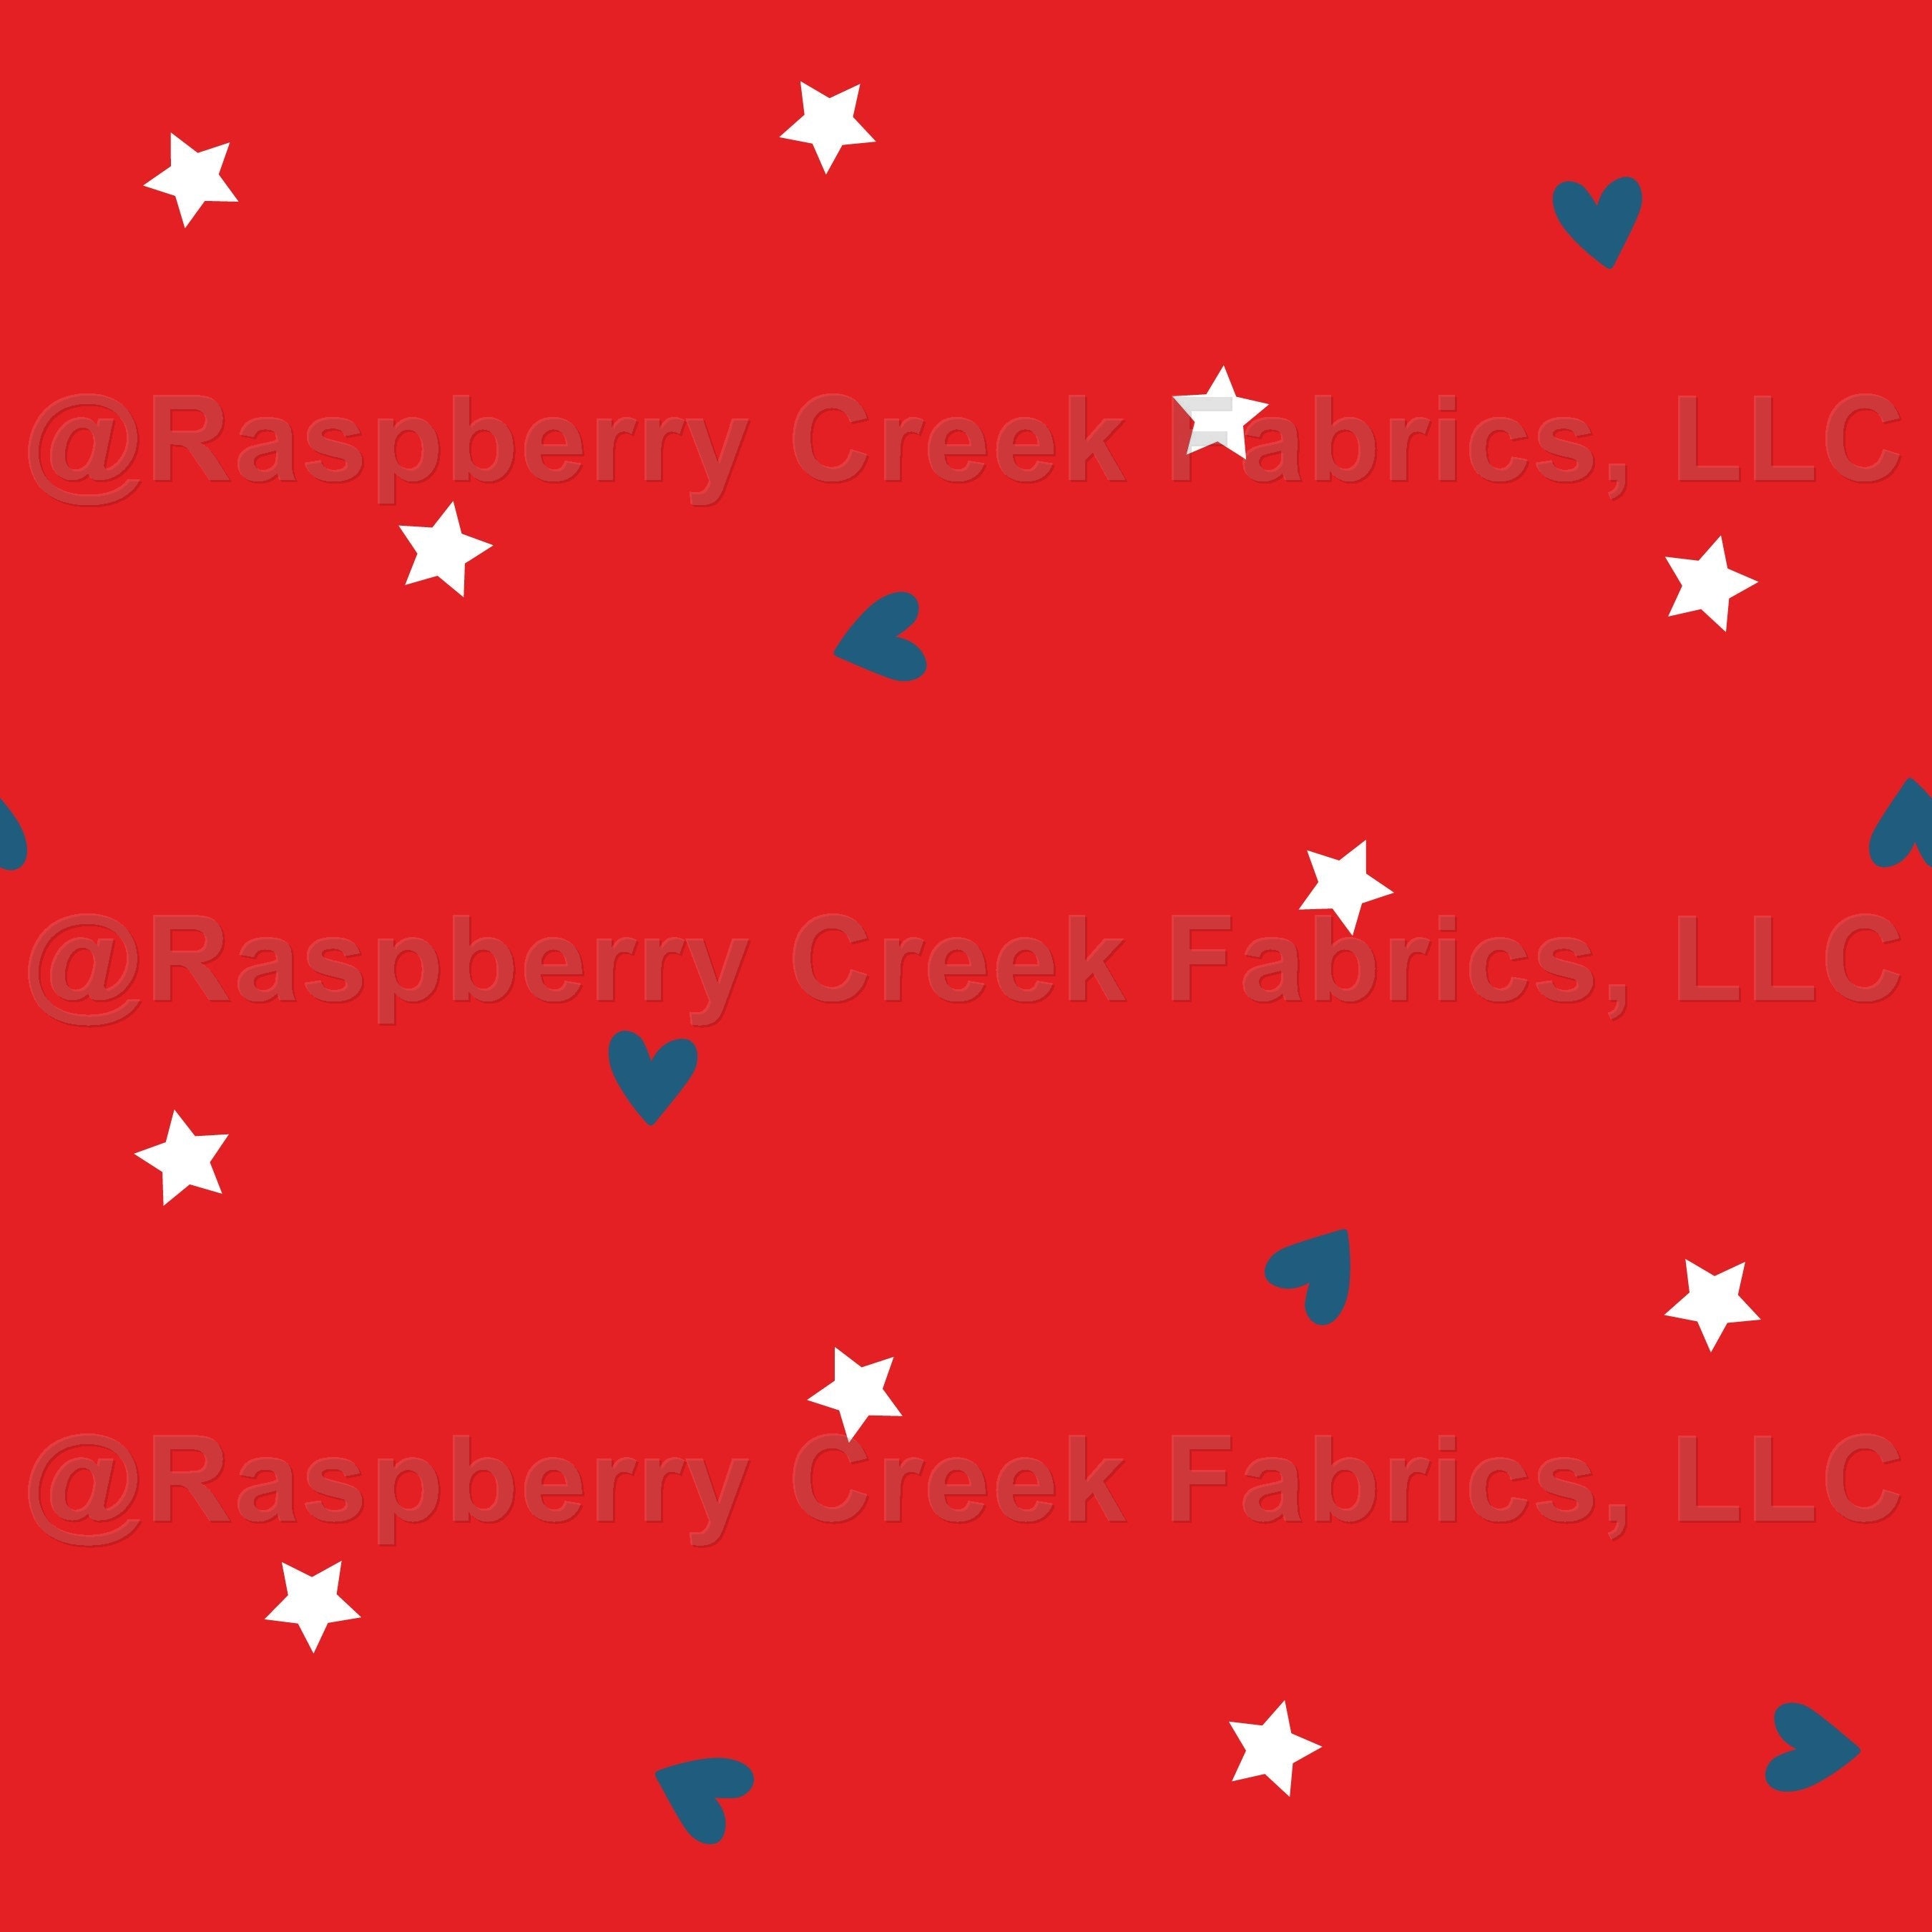 stars and hearts on red Fabric, Raspberry Creek Fabrics, watermarked